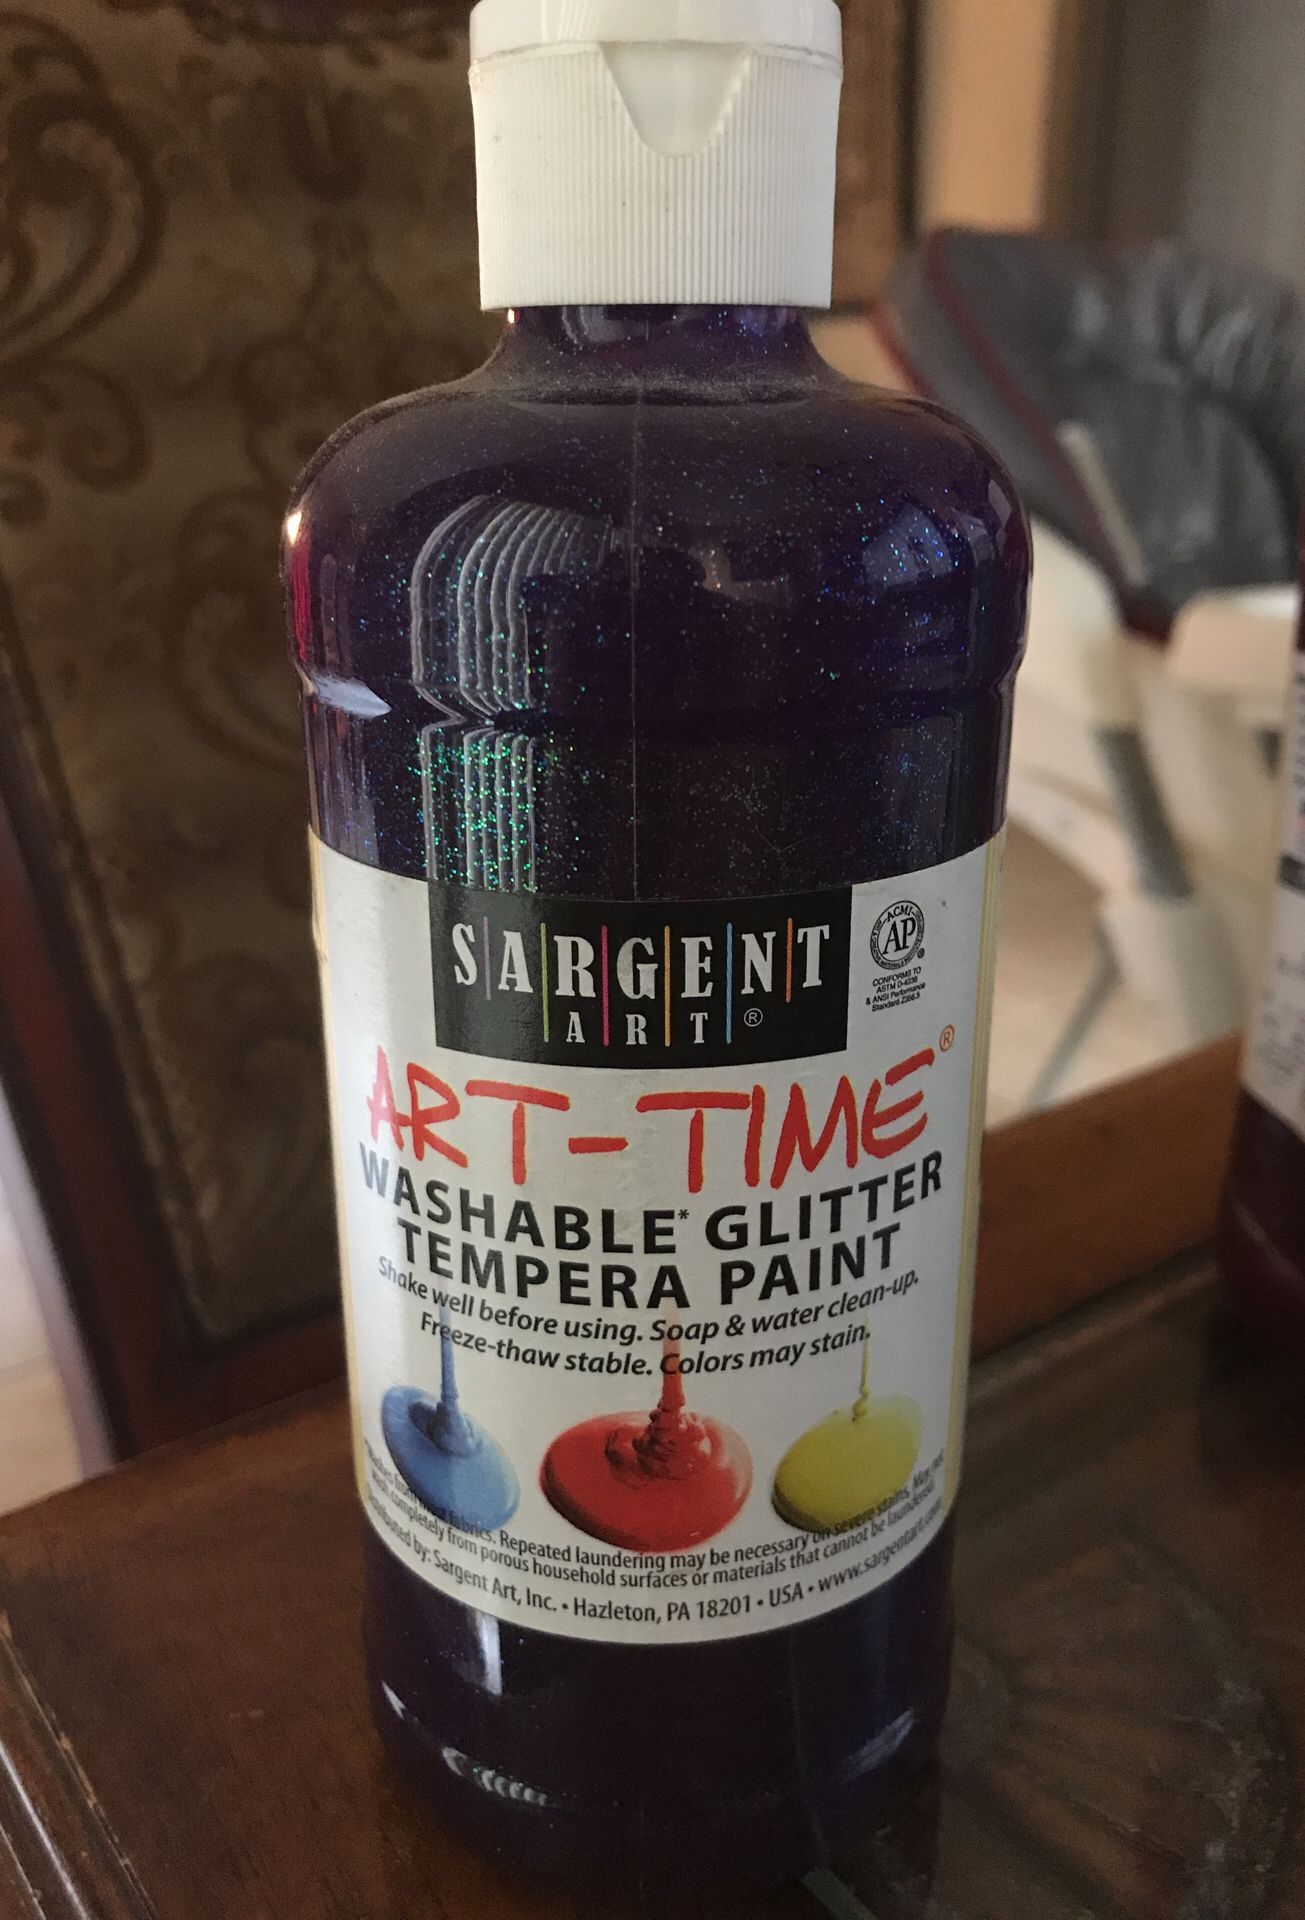 Sargent art art time glitter violet washable glitter tempera paint 16oz bottle